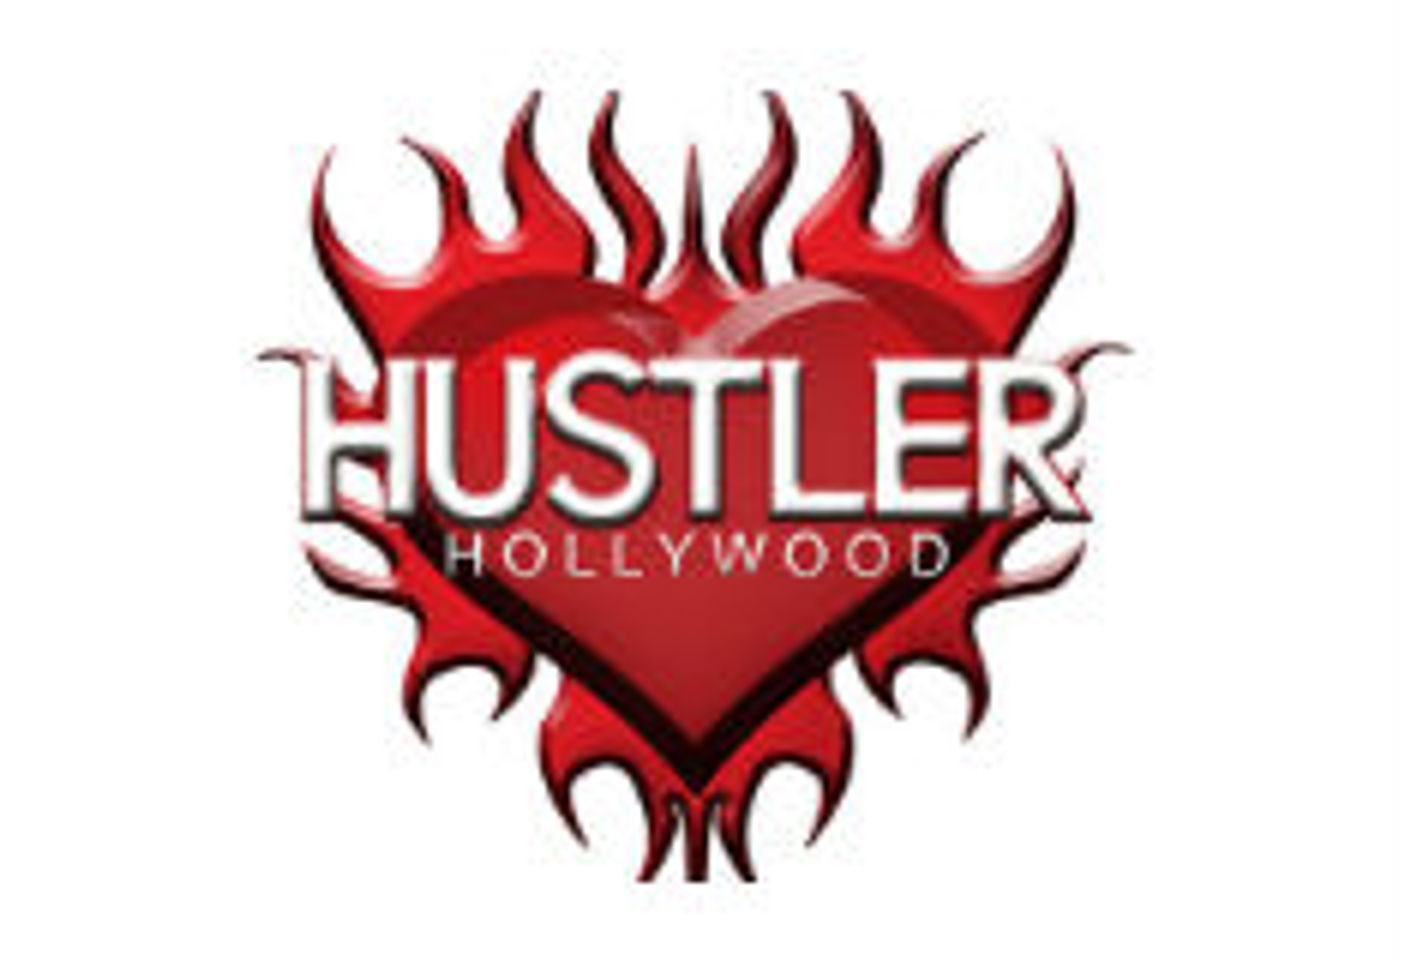 Hustler Hollywood in Nashville Welcomes Andrew Christian Models